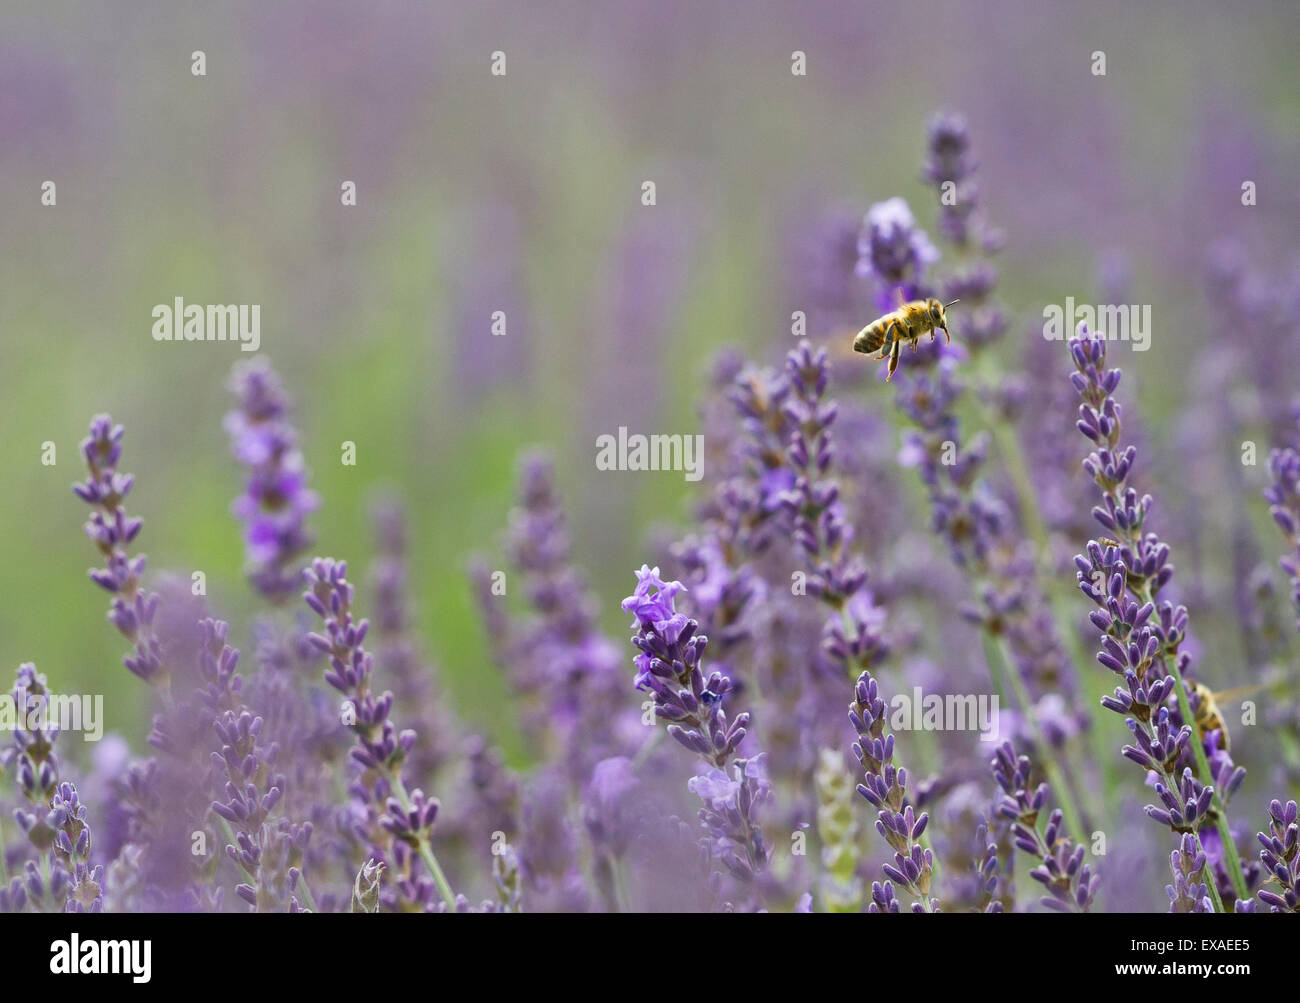 A Honey Bee on lavender (Lavandula). Stock Photo